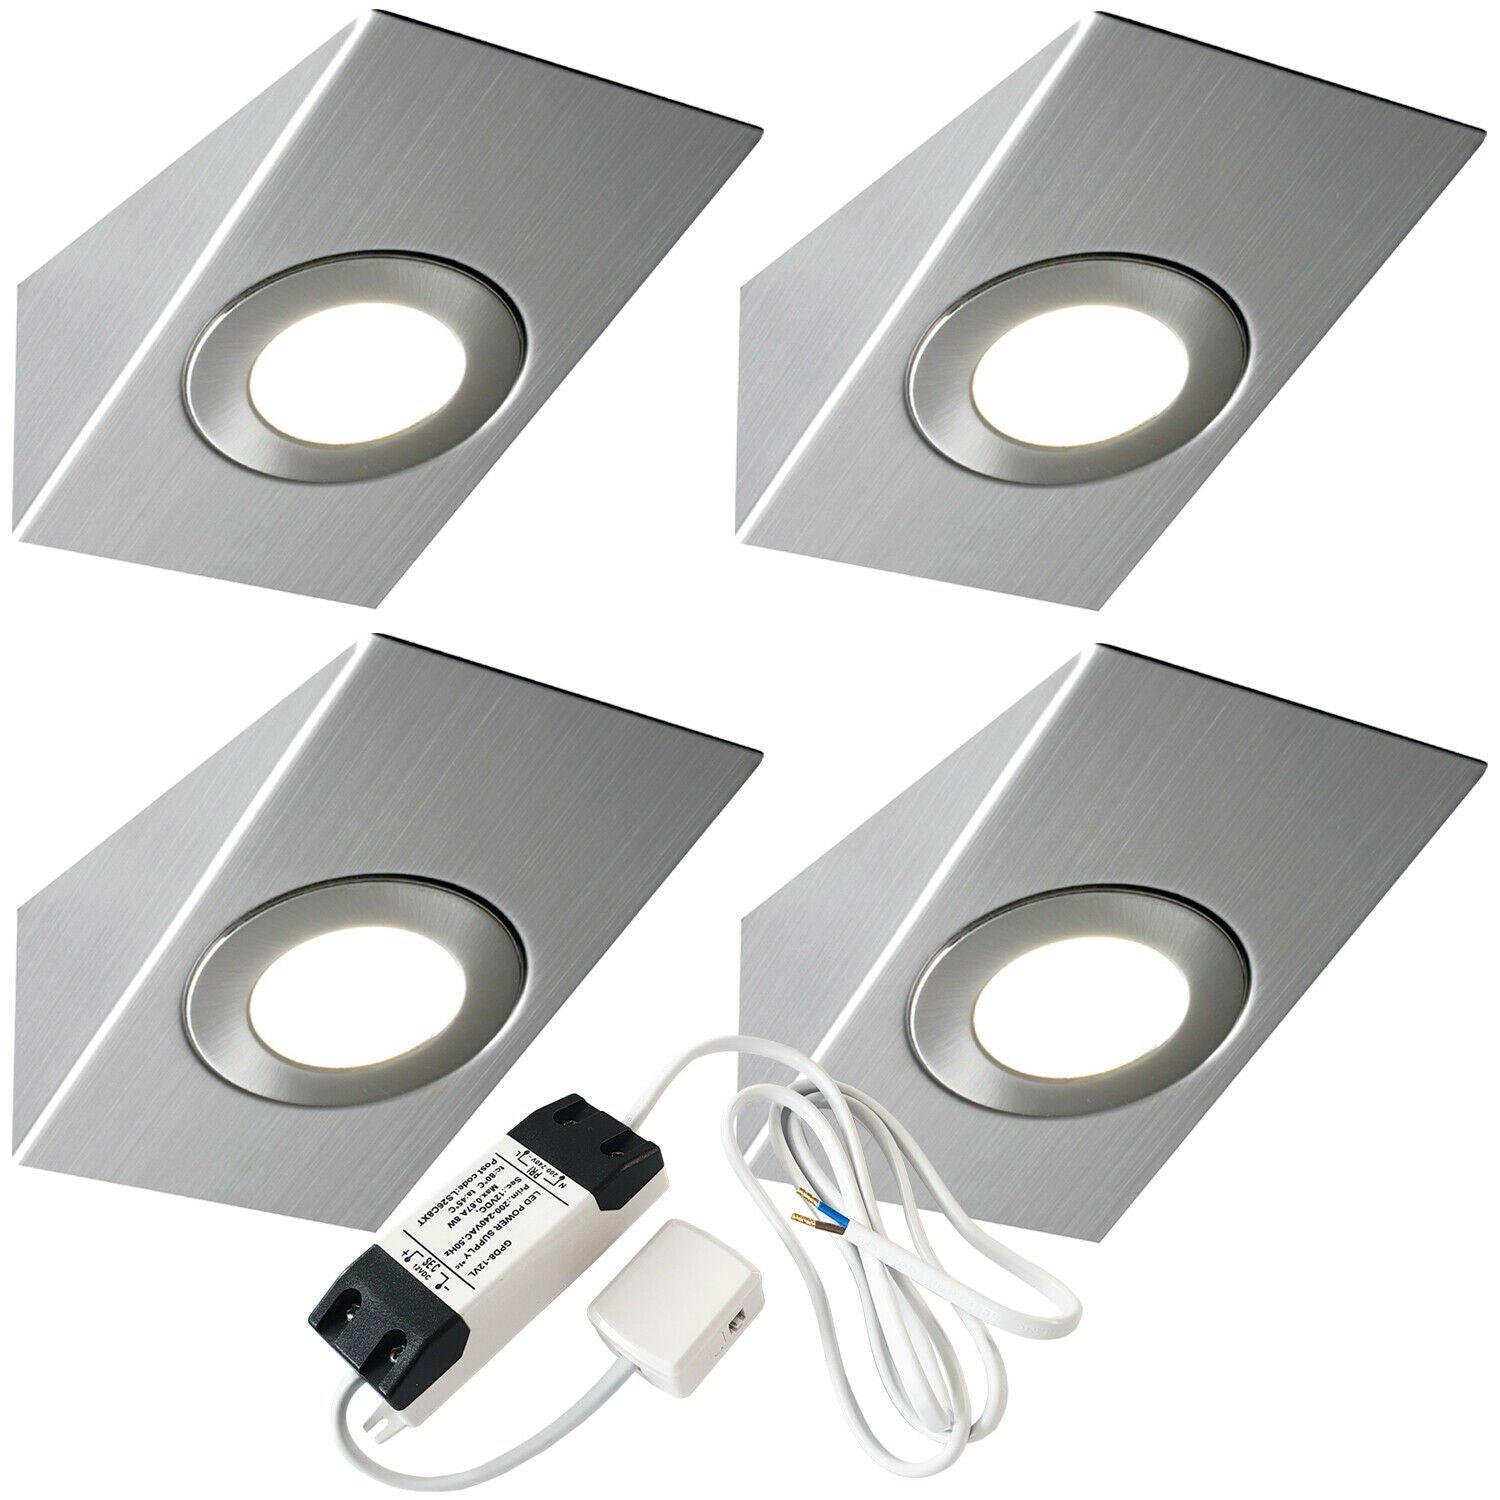 4x BRUSHED NICKEL Wedge Surface Under Cabinet Kitchen Light & Driver Kit - Natural White LED